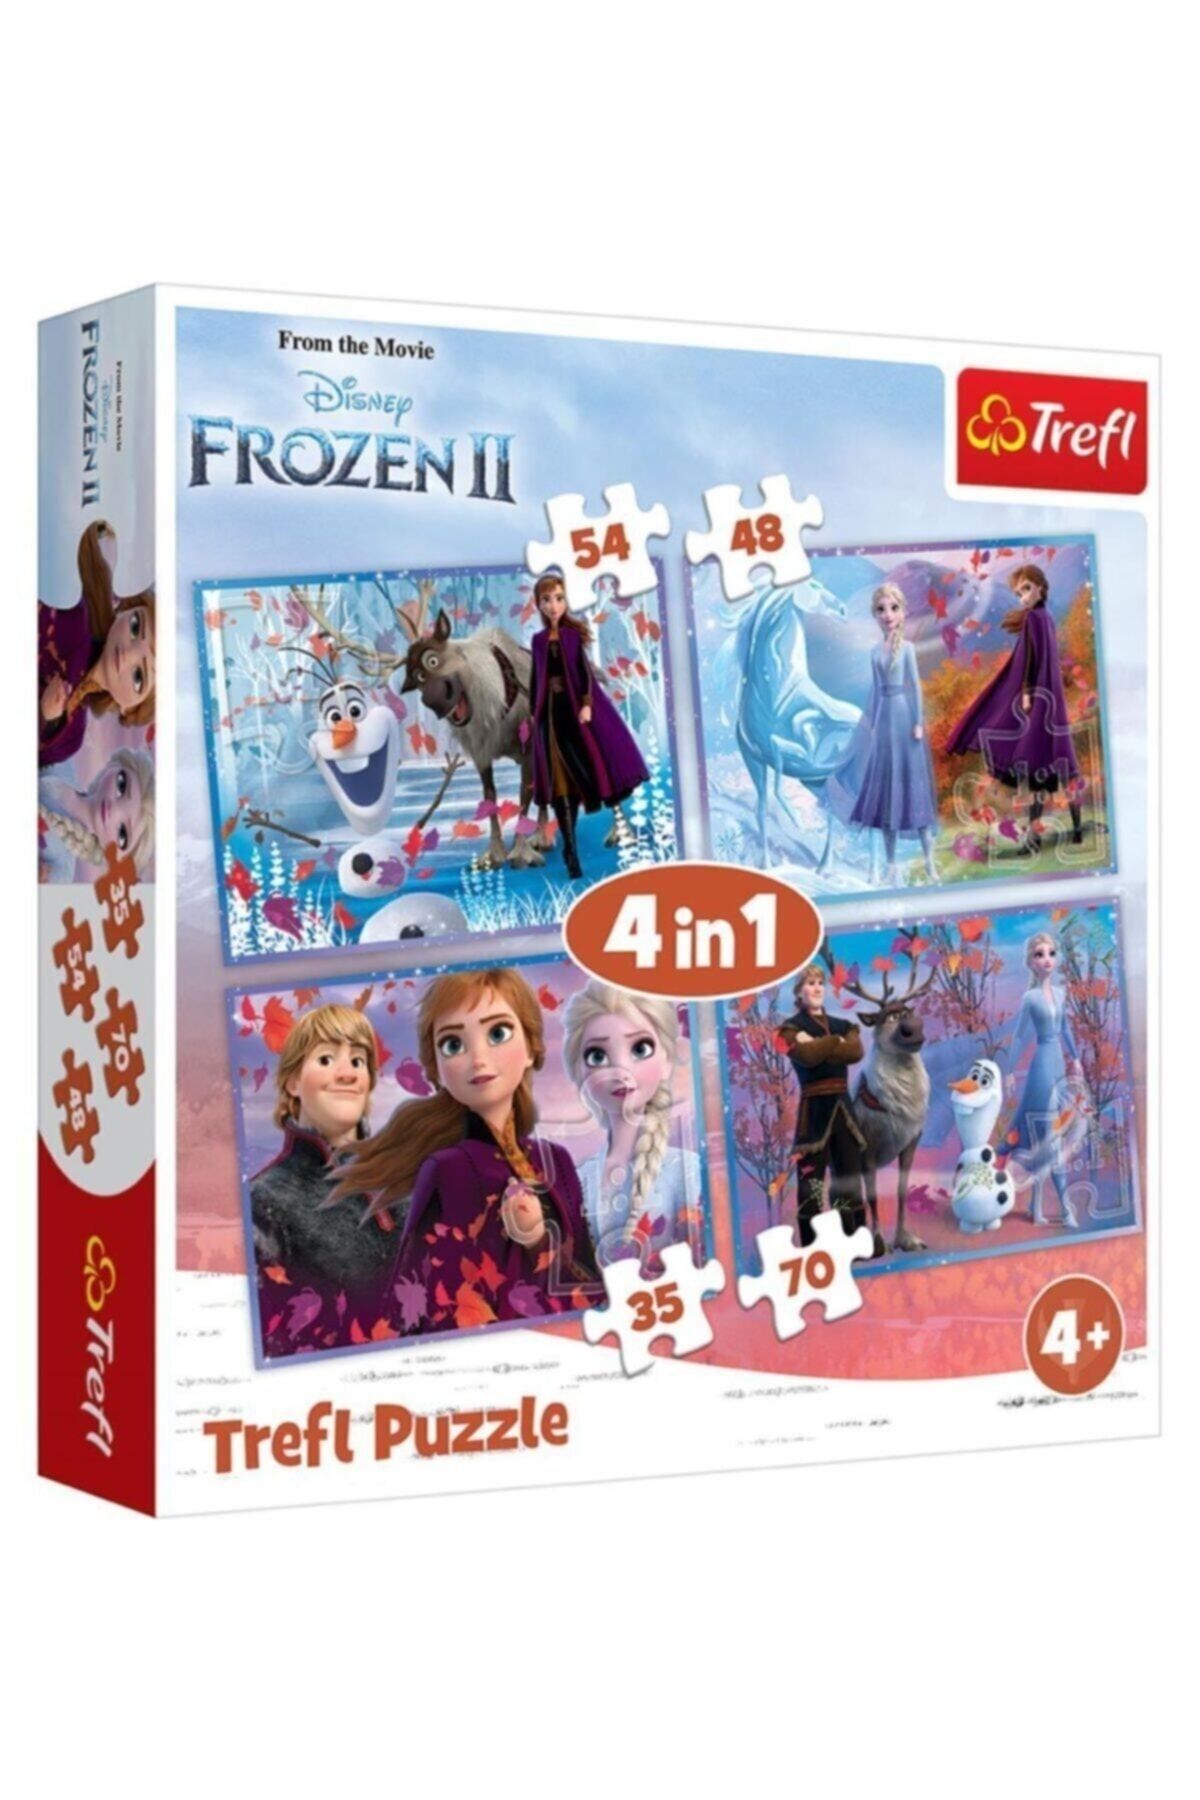 Trefl Puzzle Puzzle 4 In 1 (35+48+54+70 Parça) (28,5 X 20,5 Cm) Journey Into The Unknown Frozen 34323